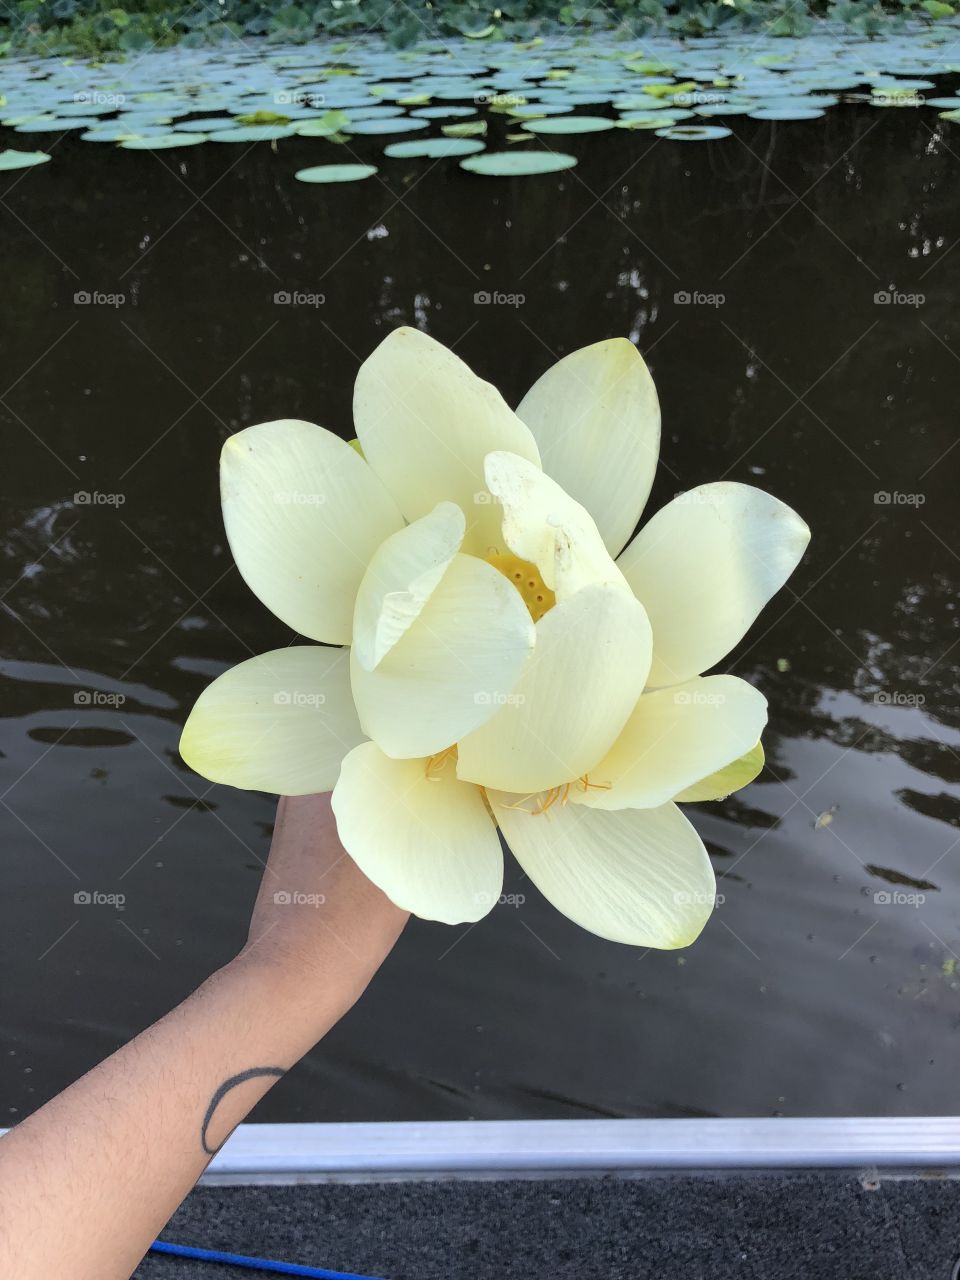 Mississippi lily 